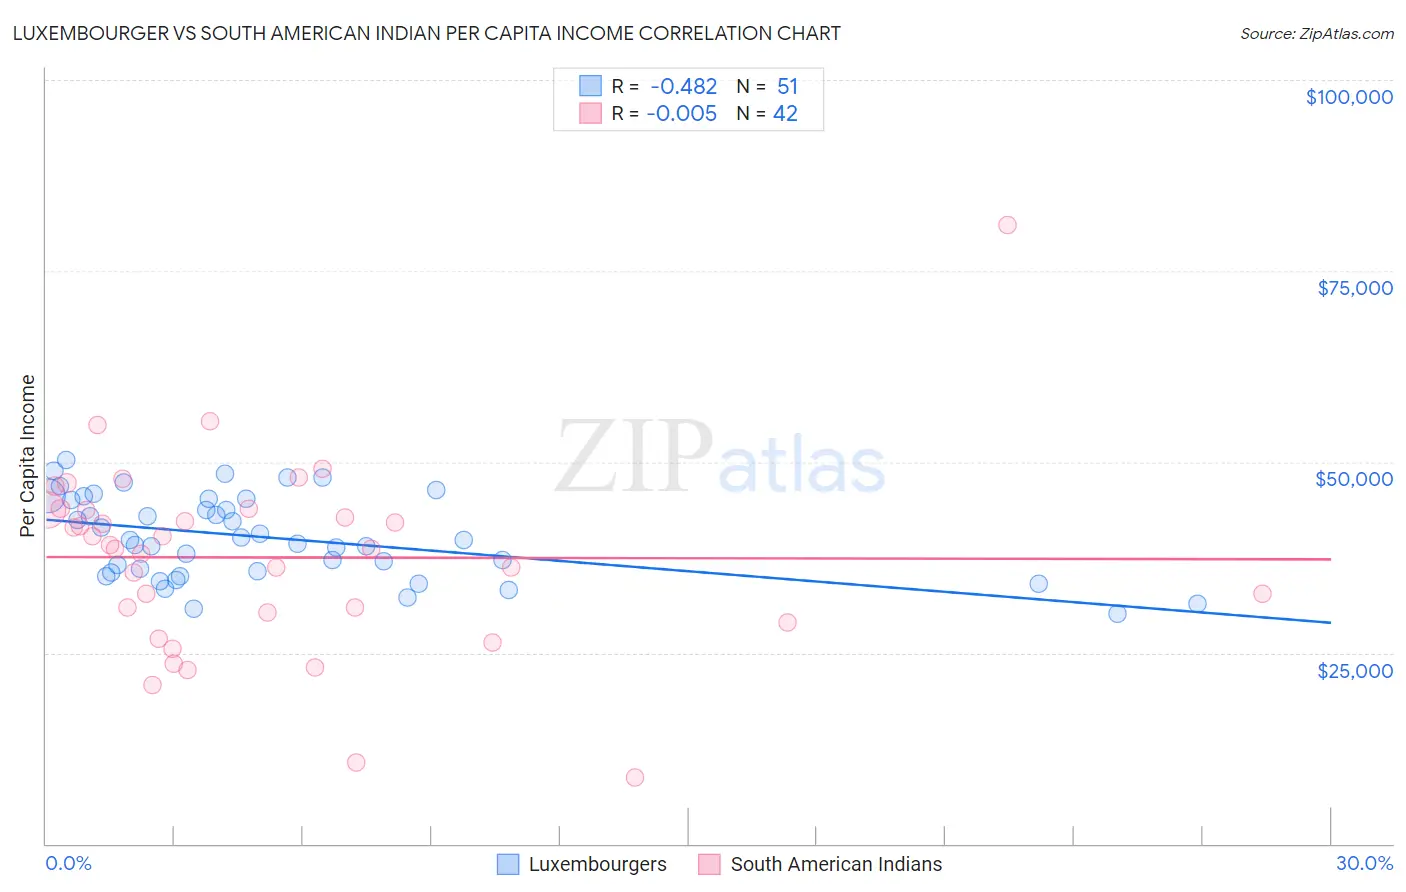 Luxembourger vs South American Indian Per Capita Income